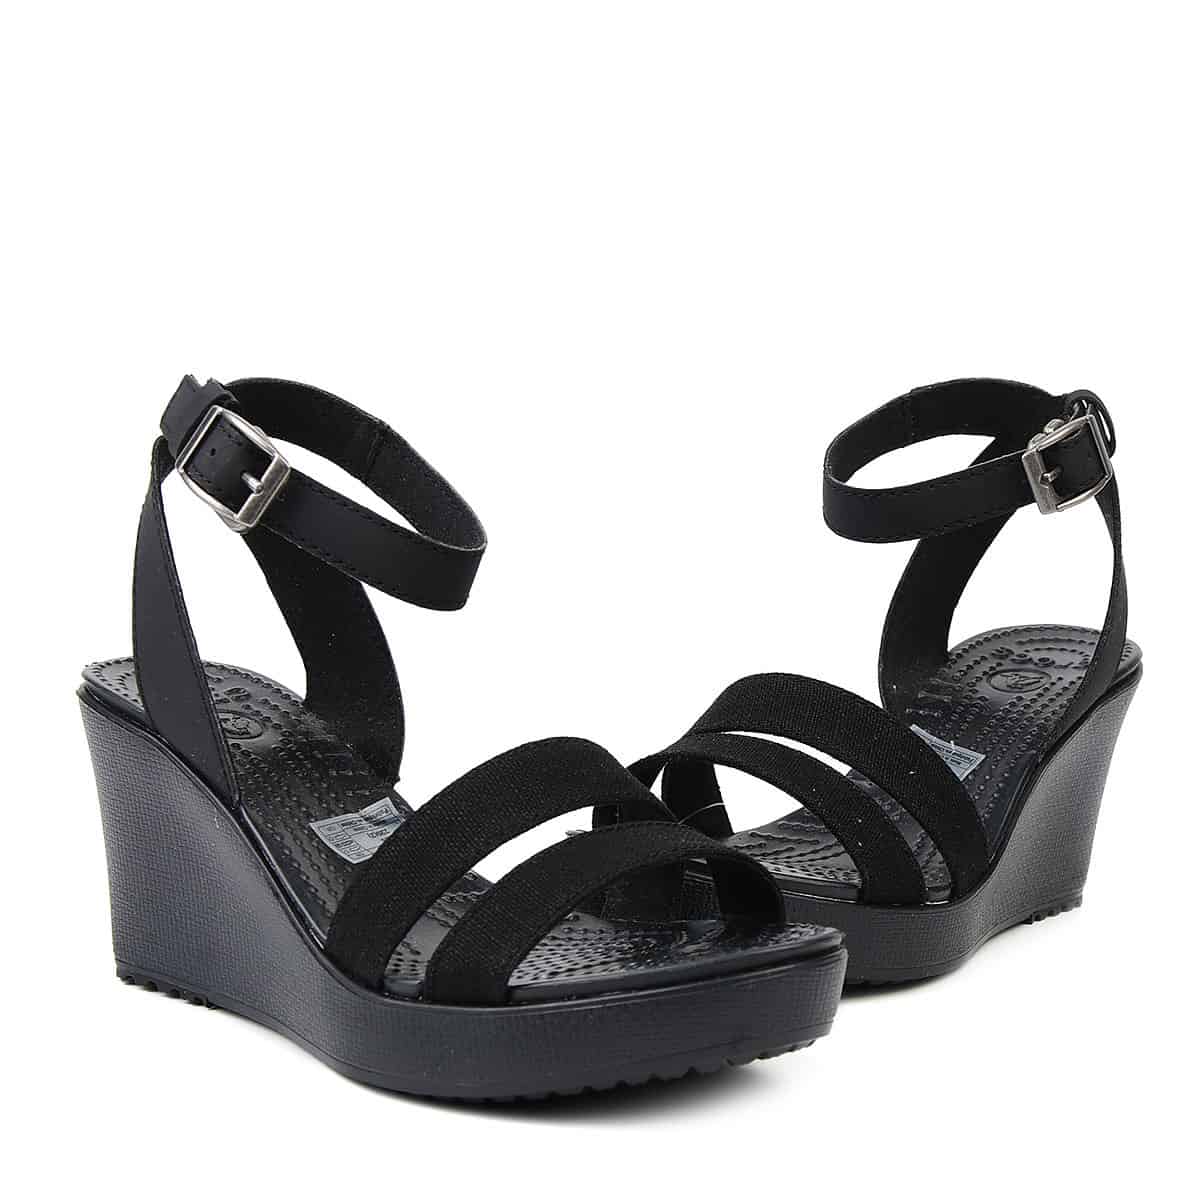 Crocs Leigh Sandal Wedges Women Black | Zarrosa Shop